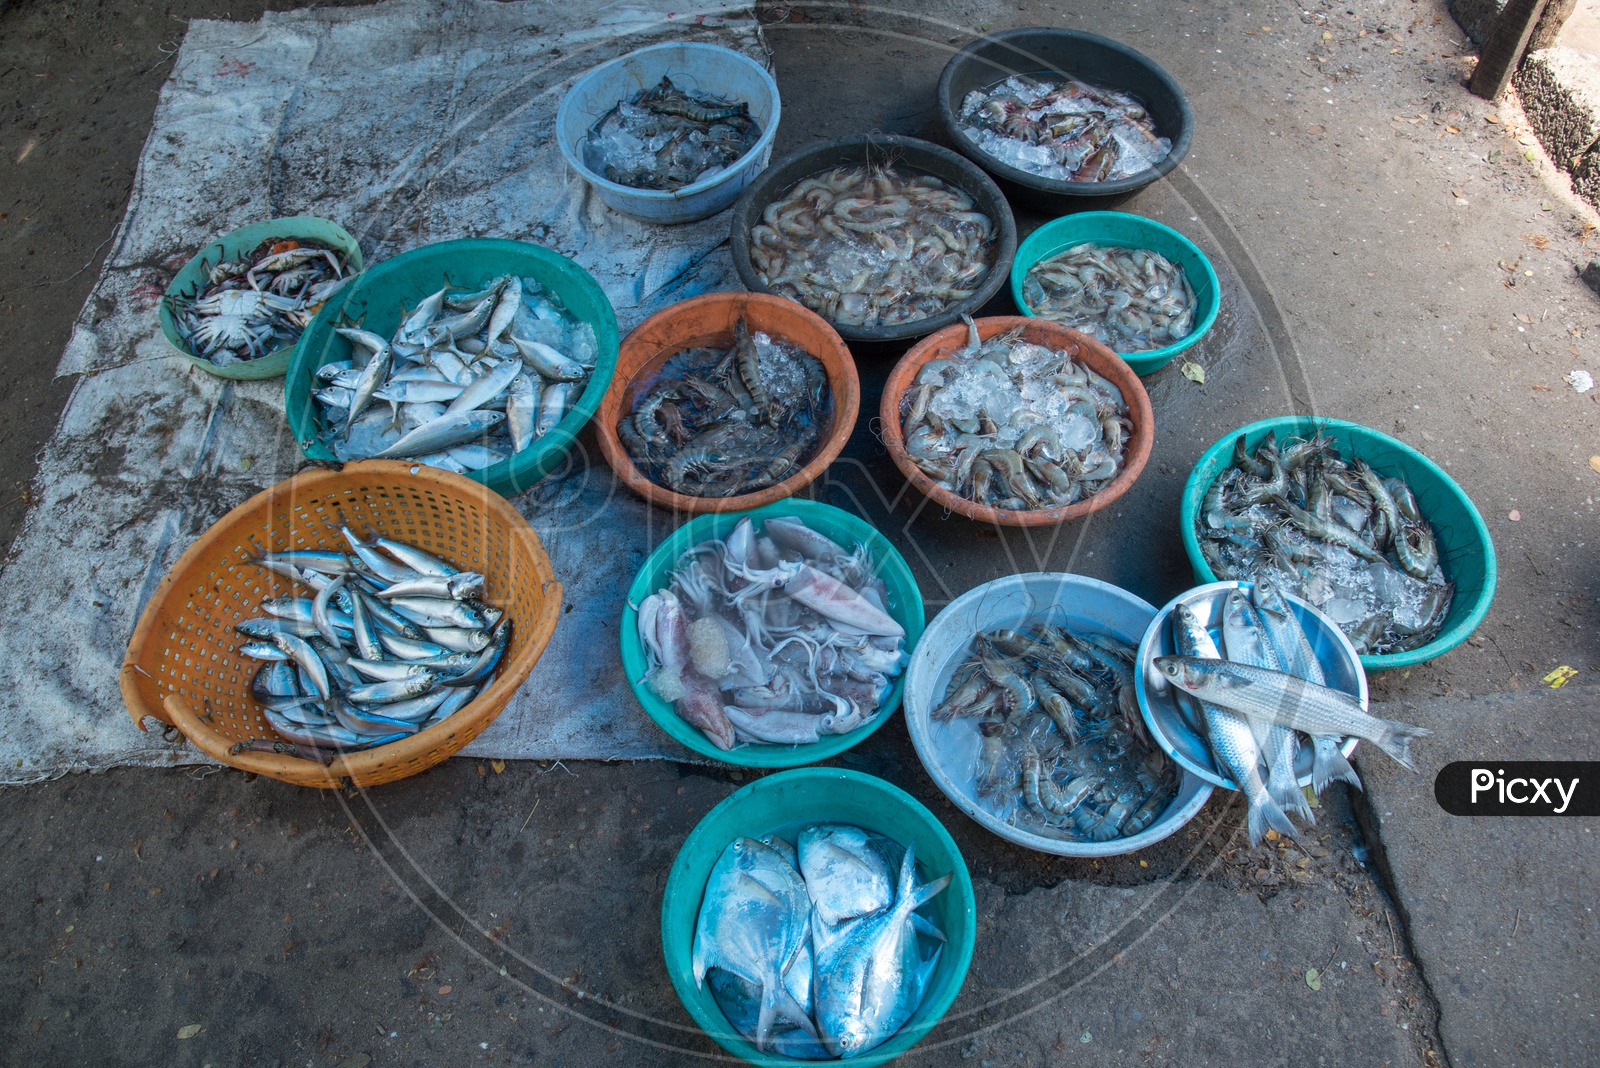 Sea Foods for sale at Fort Kochi Beach,Kerala.